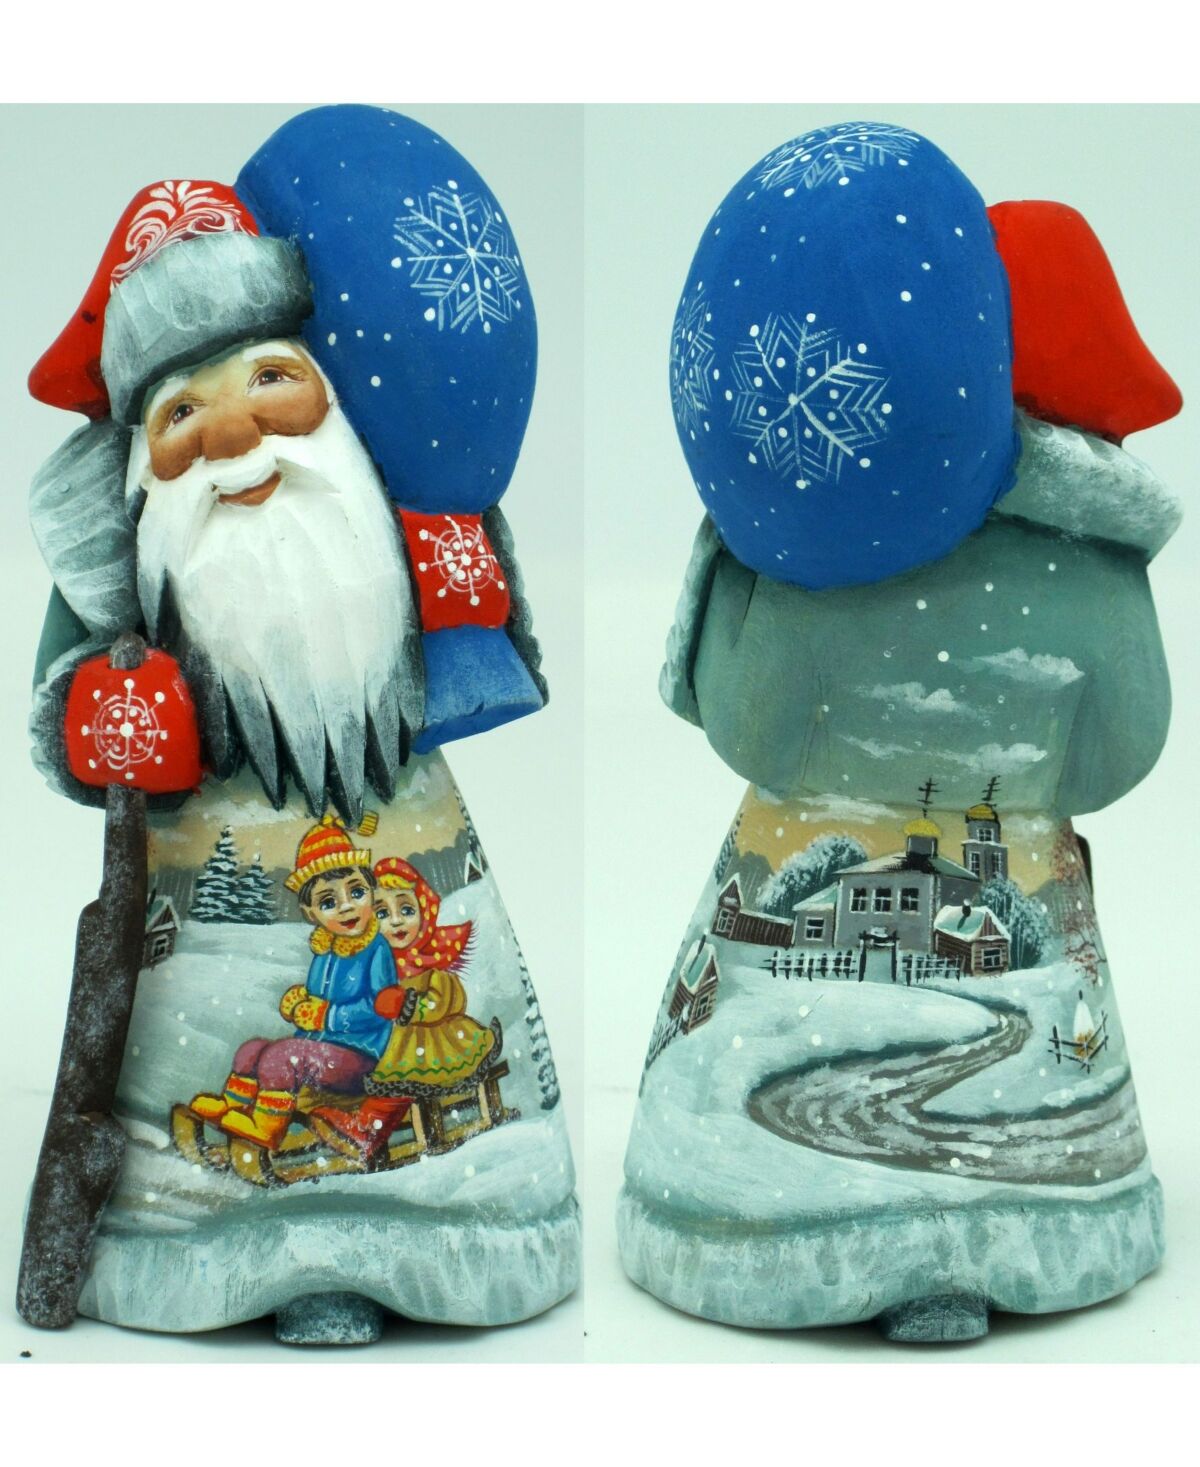 G.DeBrekht Woodcarved and Hand Painted Old World Christmas Joy Santa Figurine - Multi